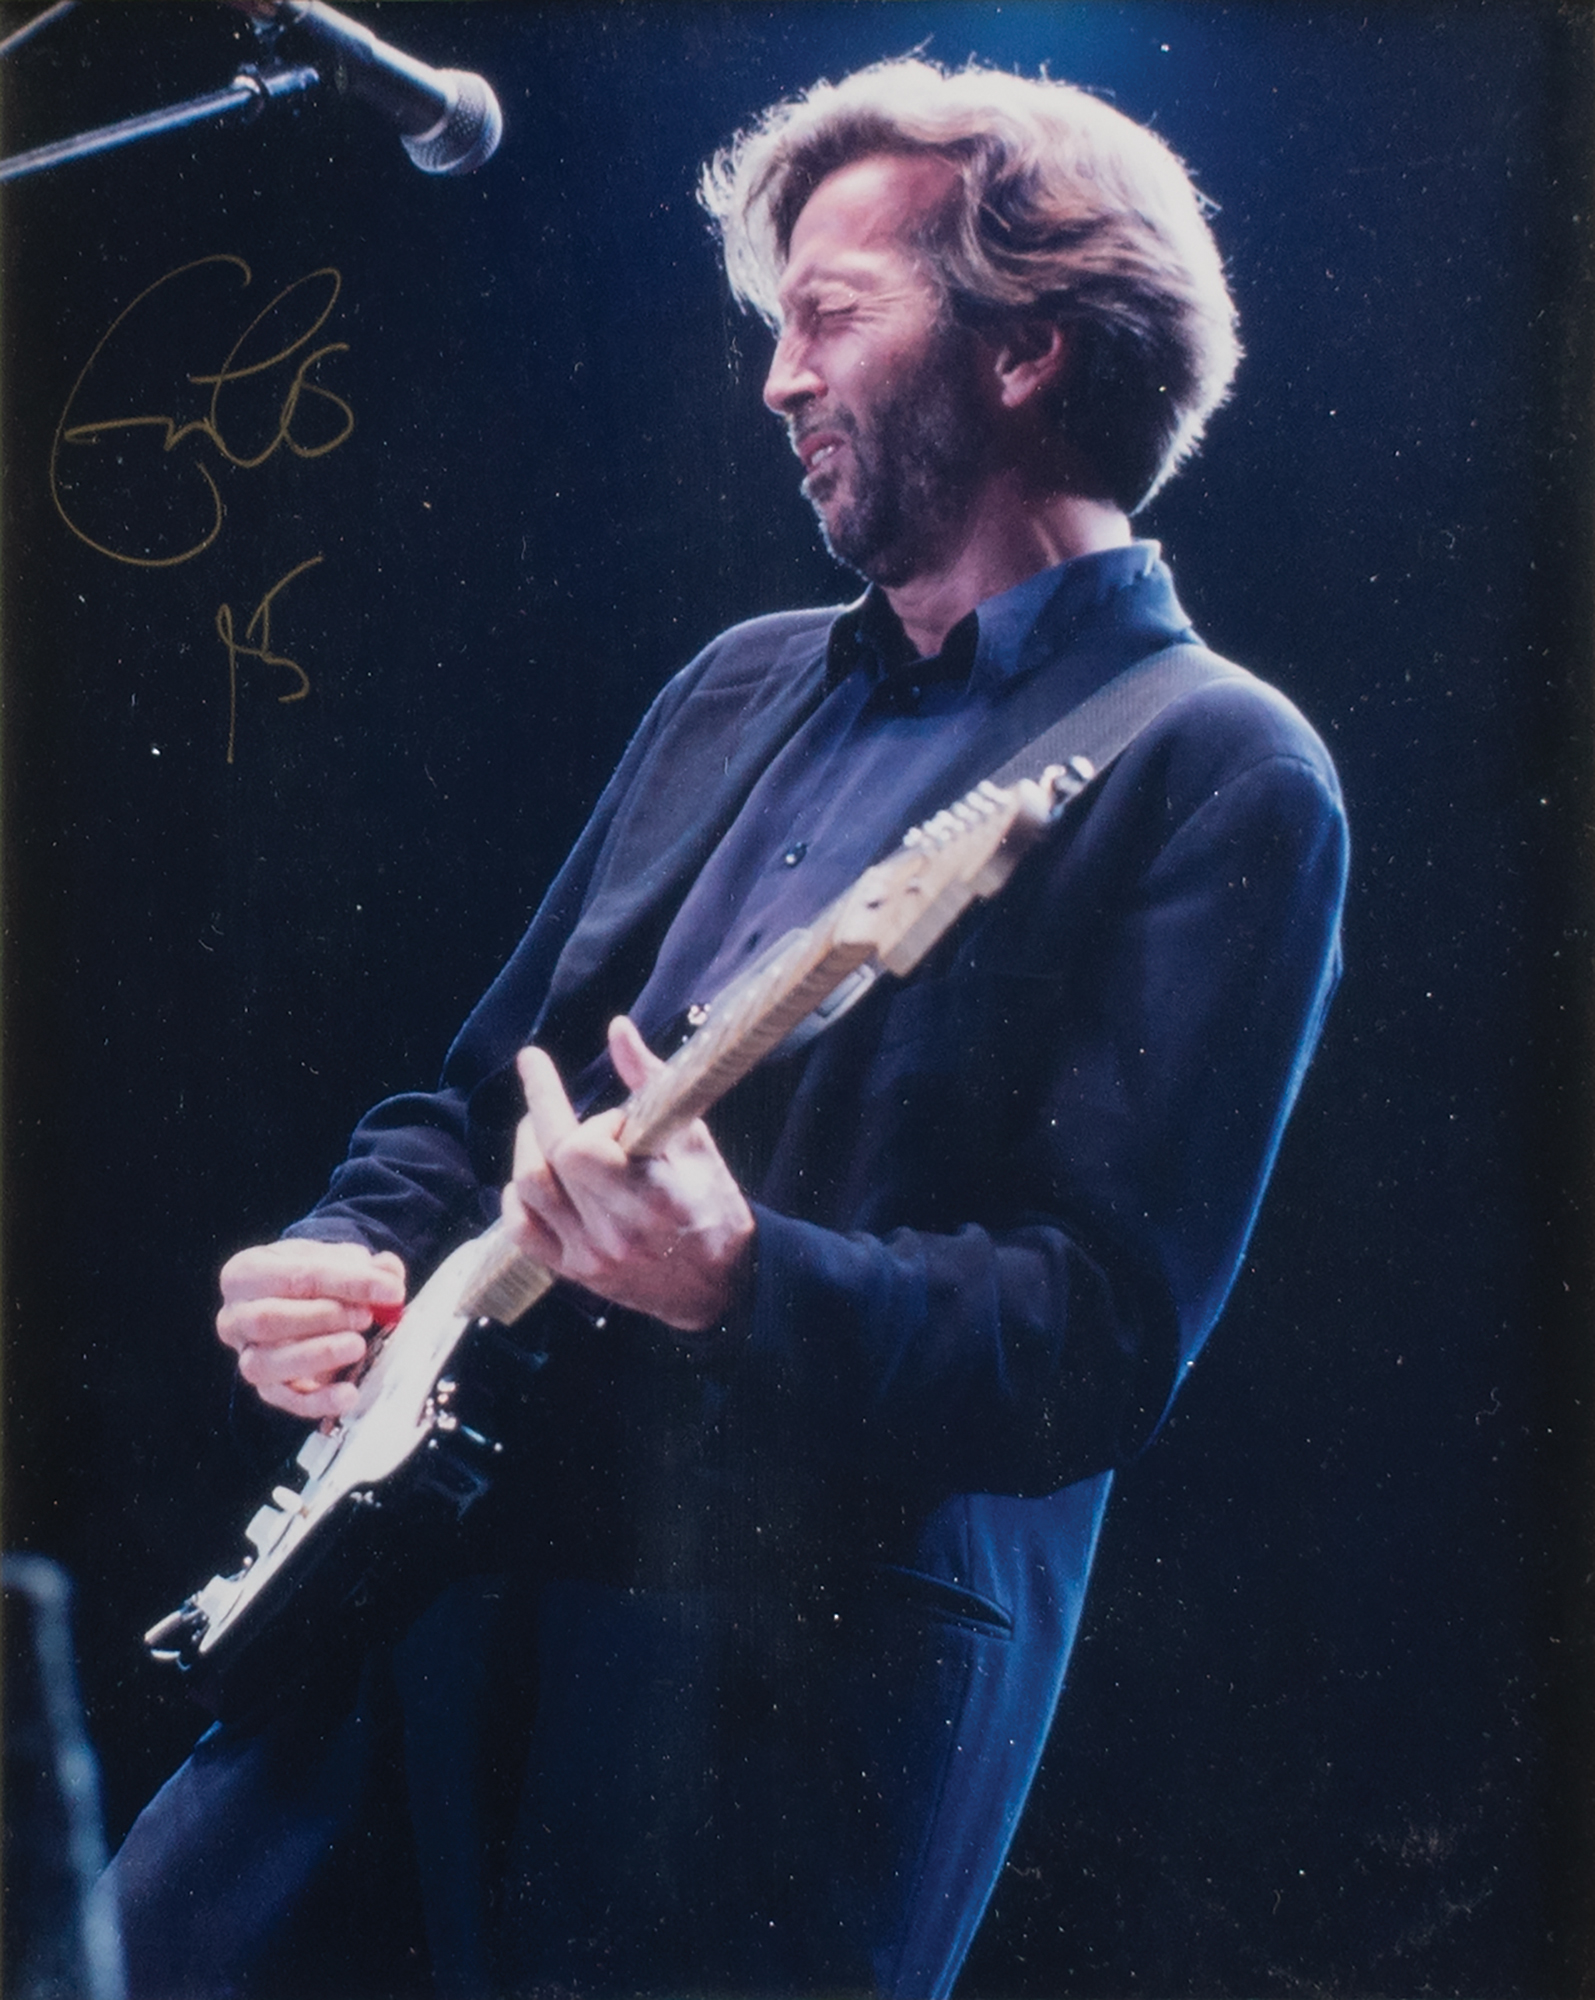 Lot #740 Eric Clapton Signed Photograph